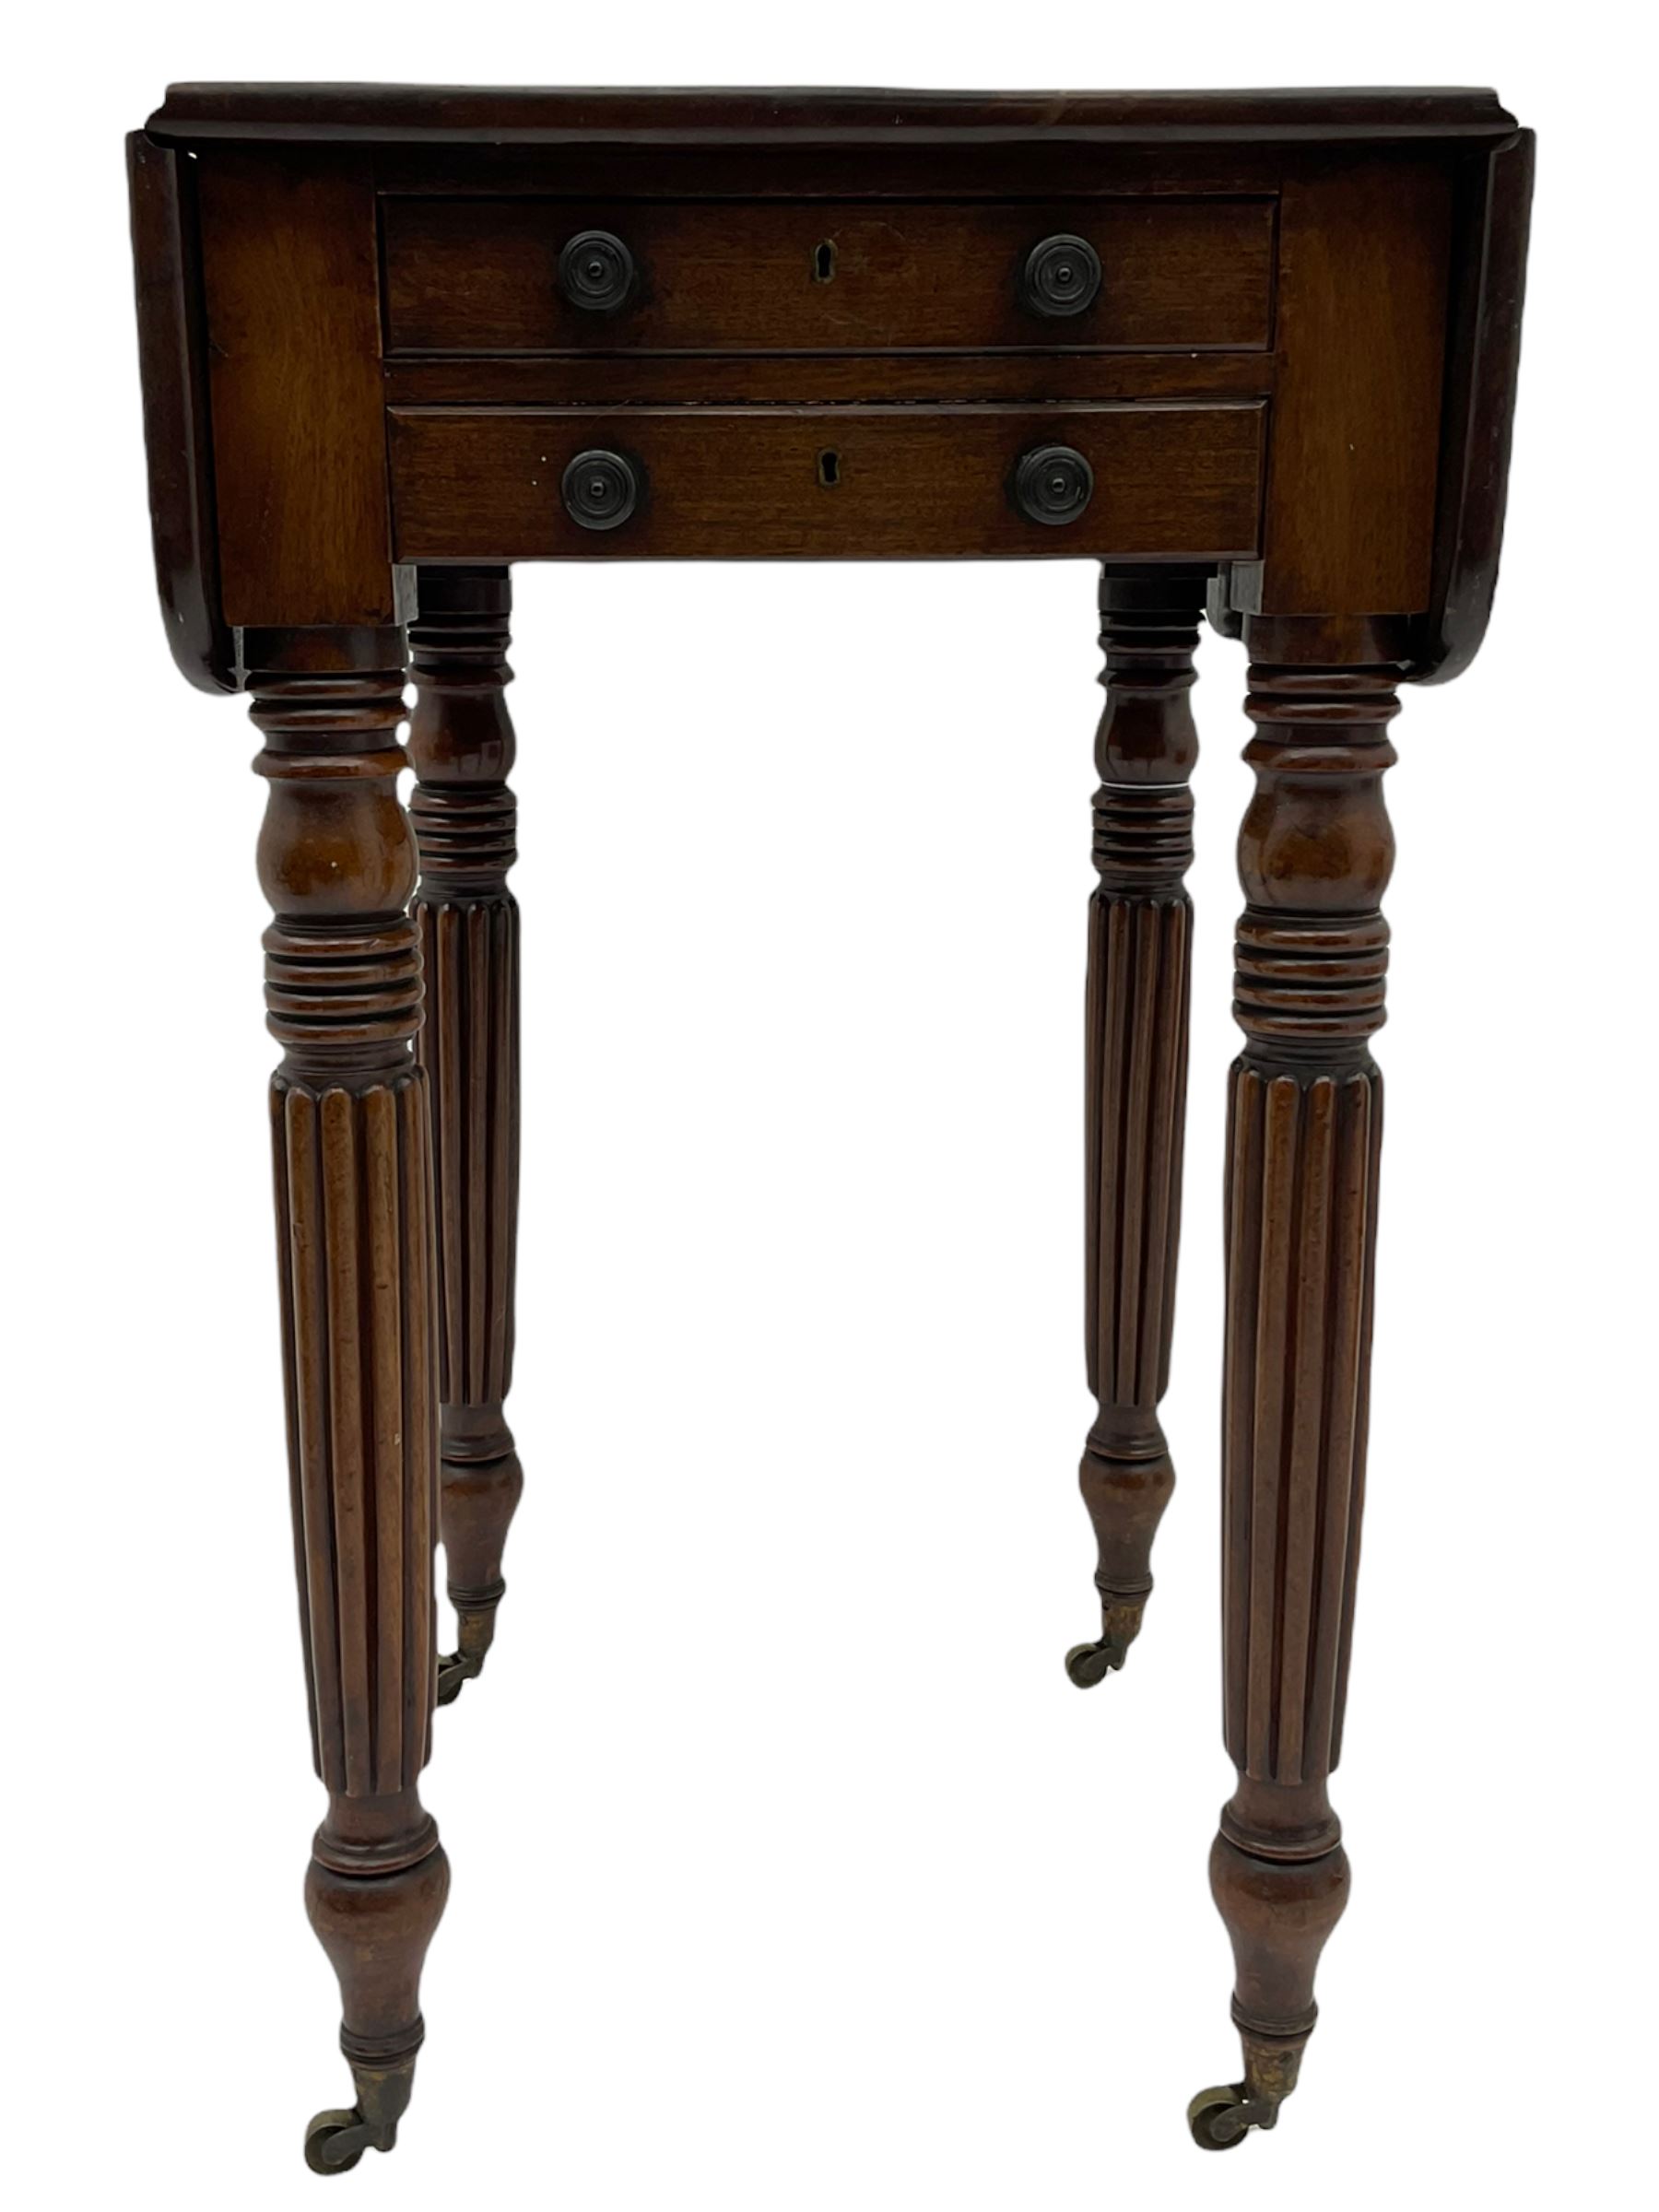 Early 19th century mahogany work table - Image 2 of 7